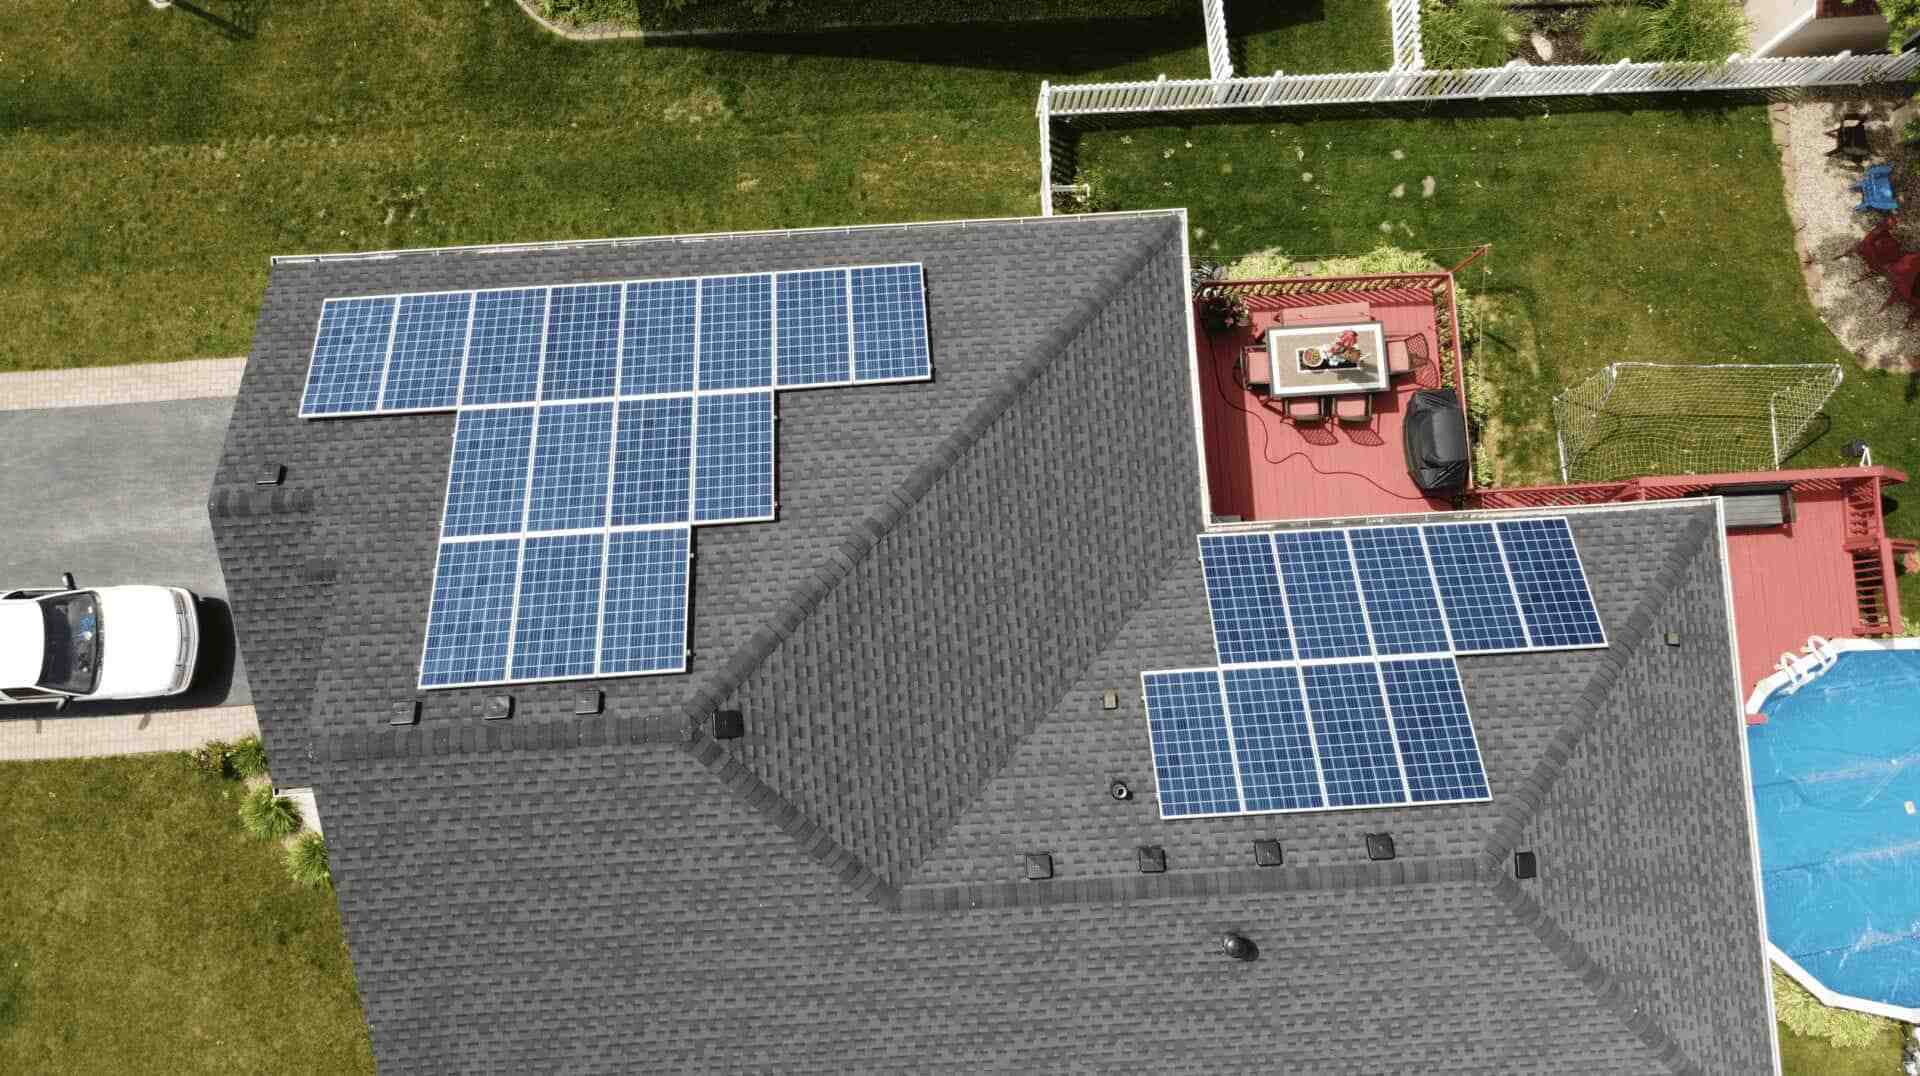 How do I set up solar panels on my house?